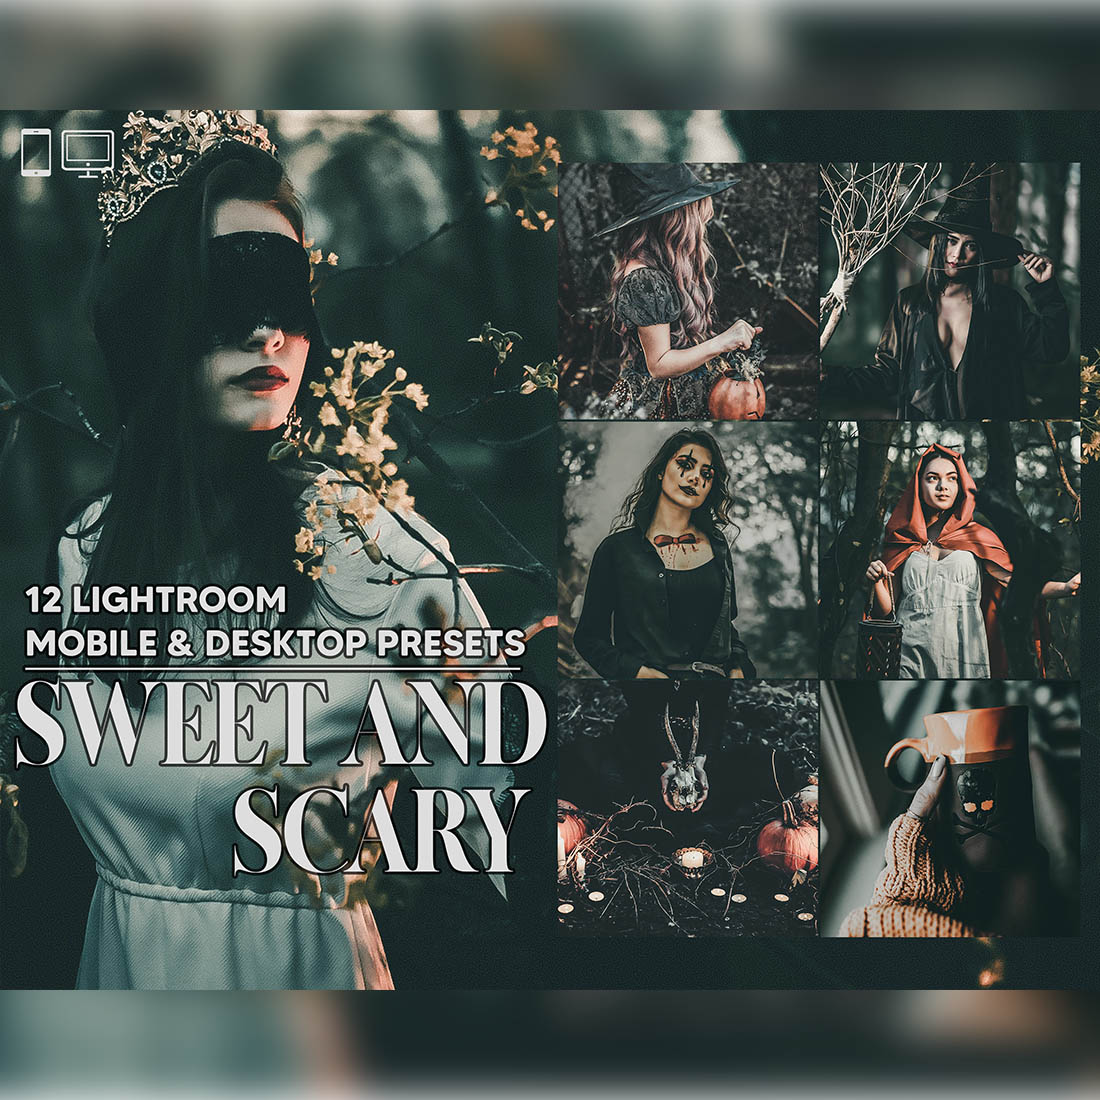 12 Sweet And Scary Lightroom Presets, Halloween Preset, Pumpkin Desktop LR Filter DNG Lifestyle Theme For Blogger Portrait Instagram cover image.